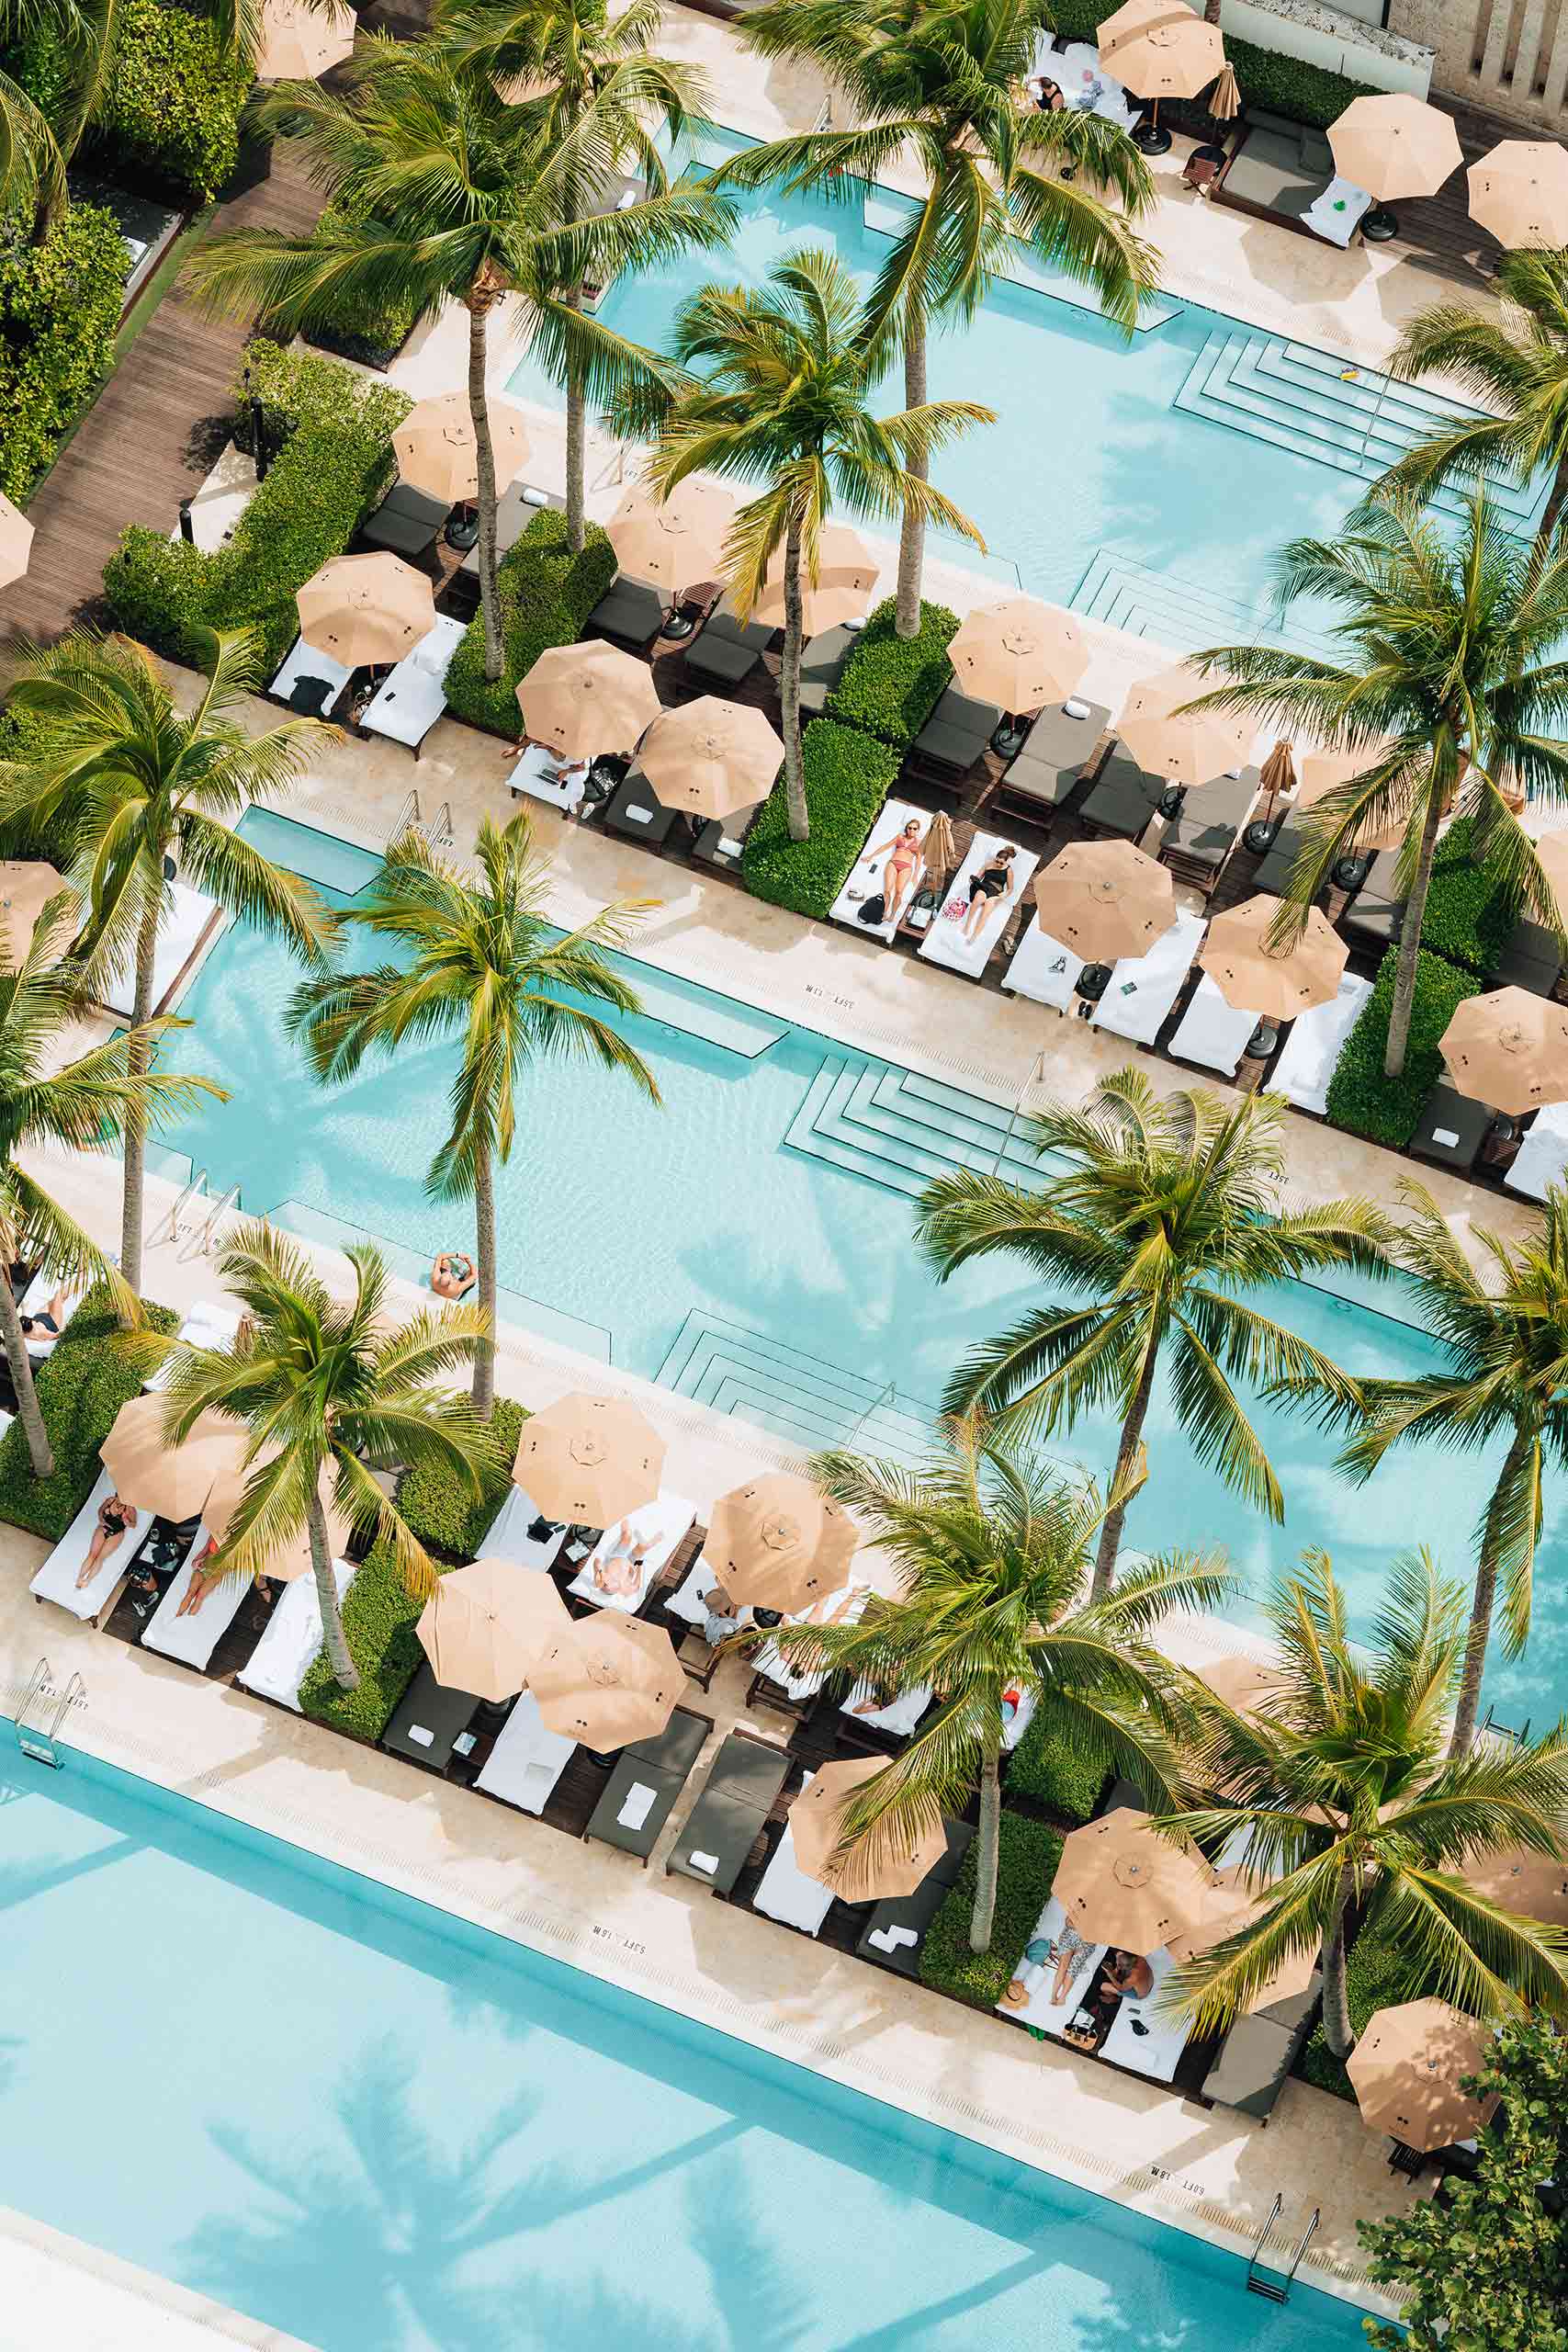 Ariels shot of the pools at The Setai, Miami Beach, Florida, USA.